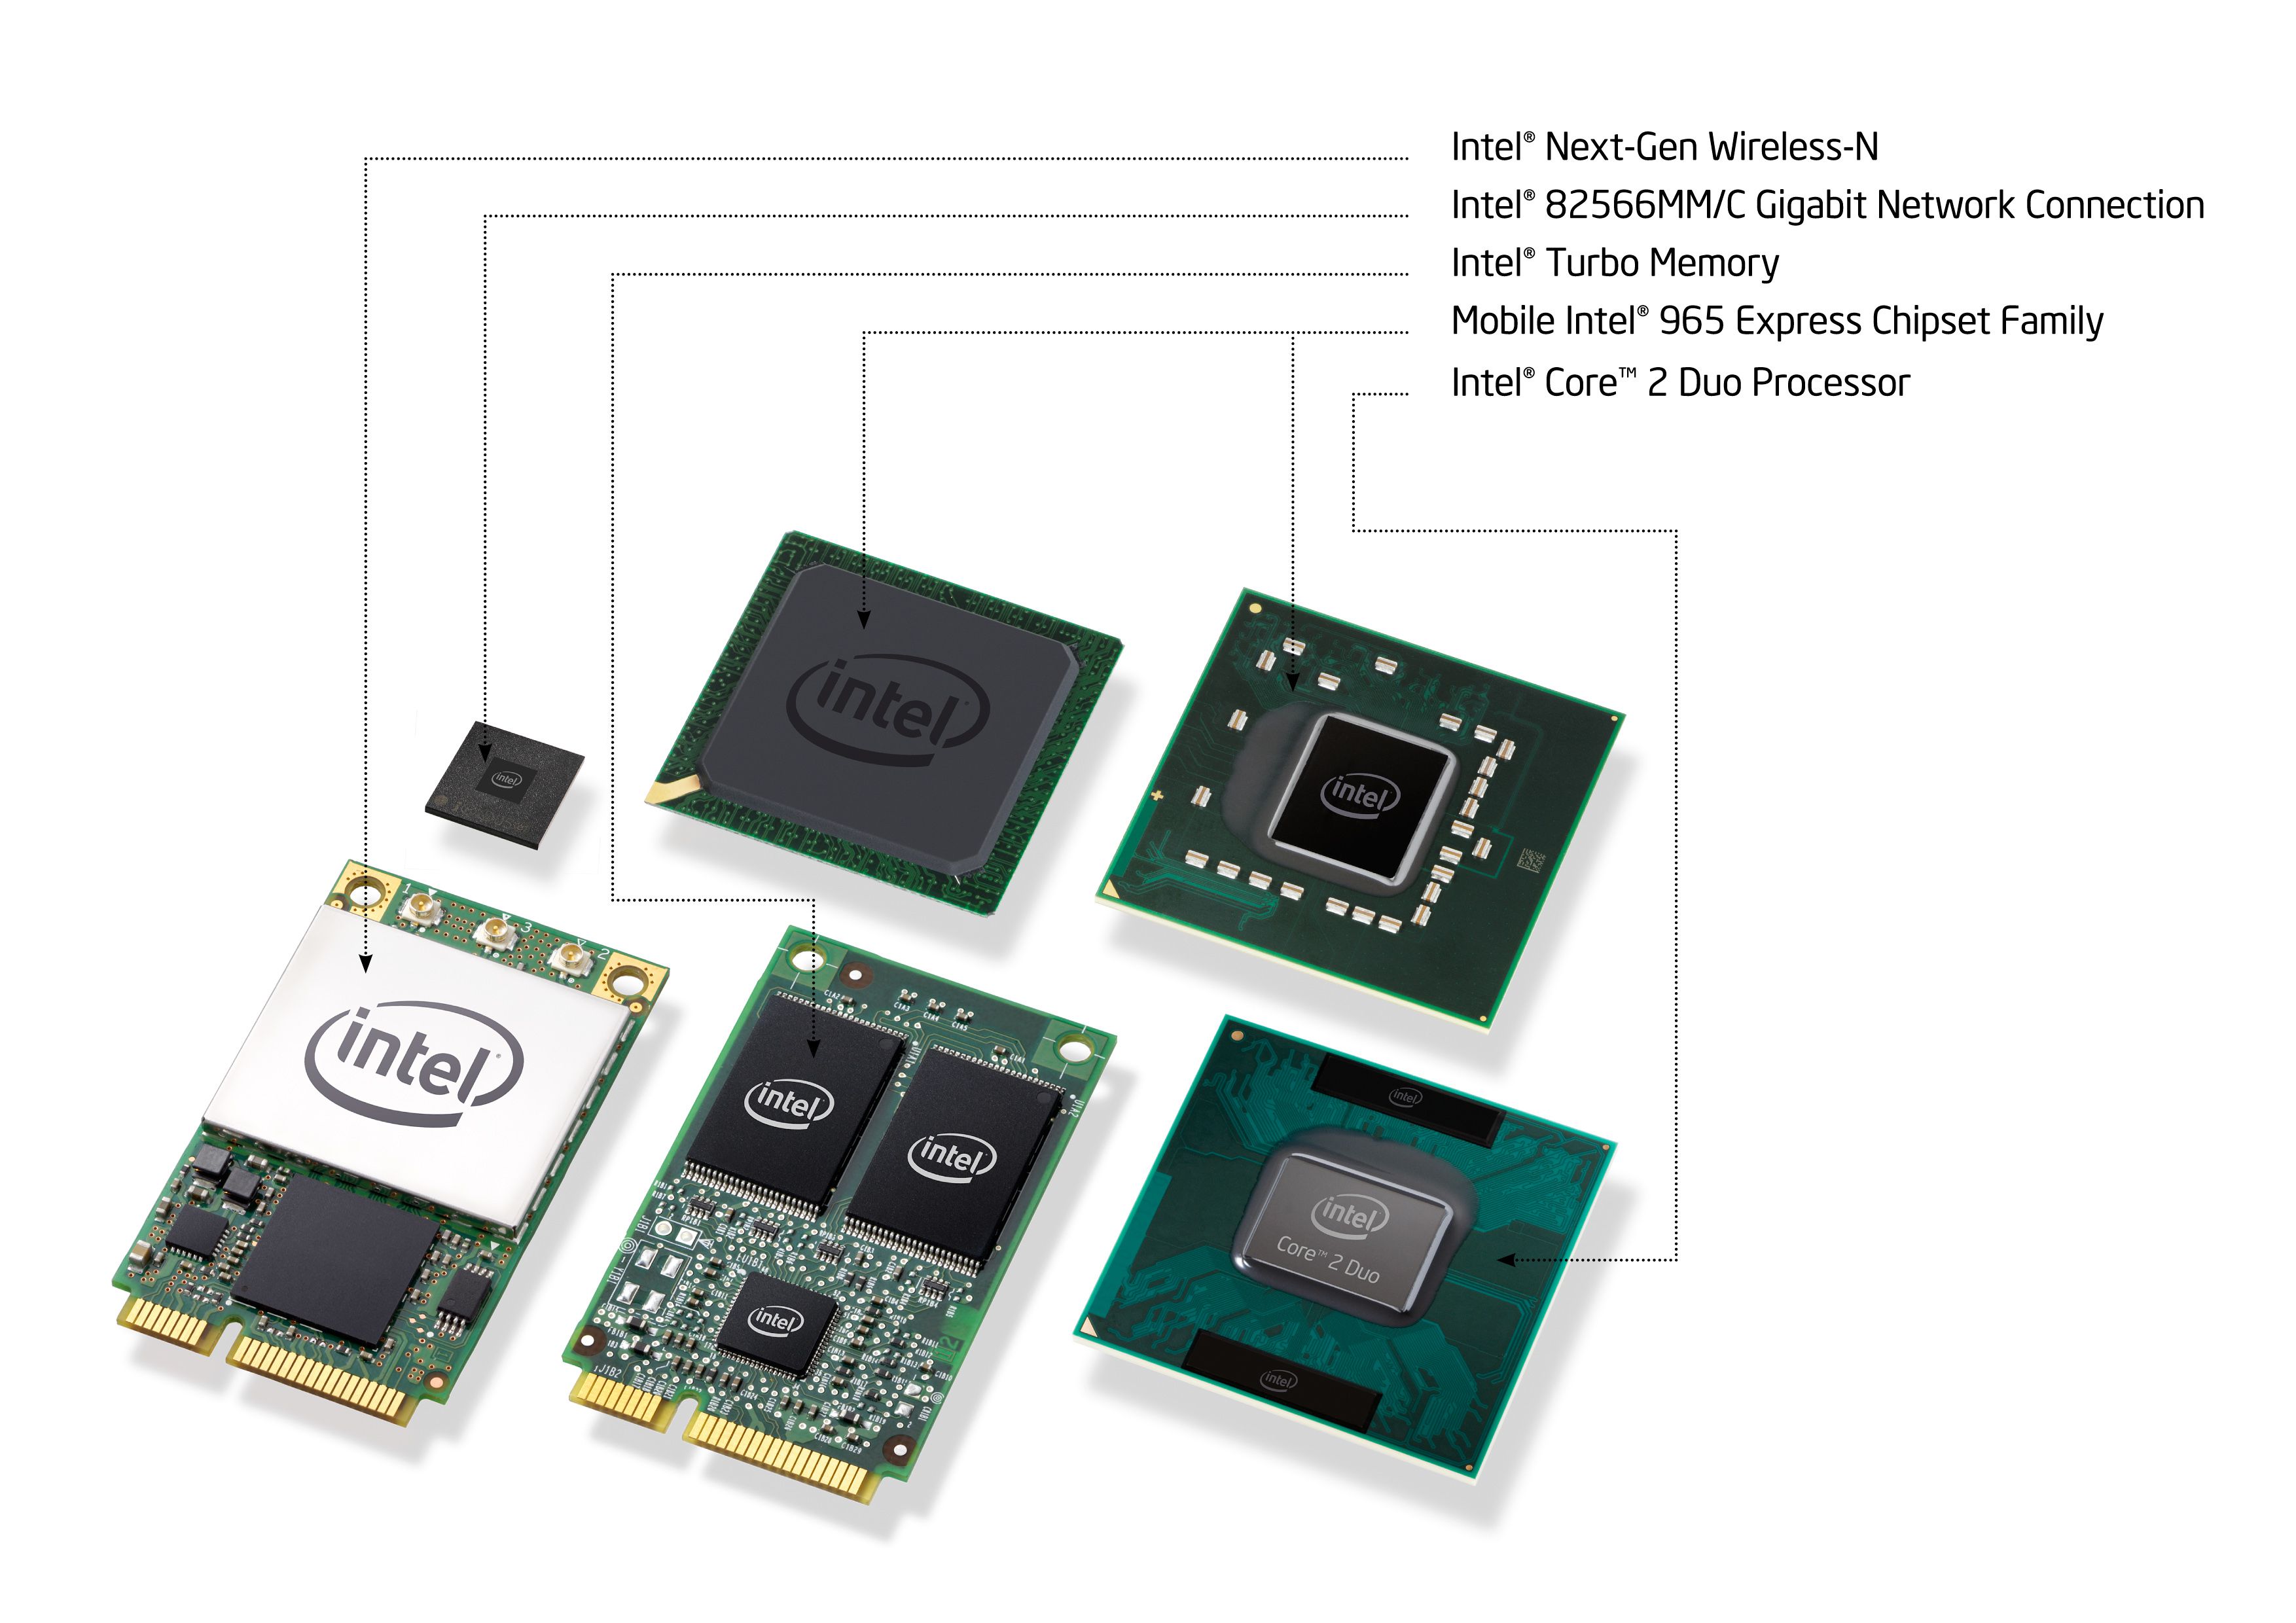 Intel next gen processeurs c2d